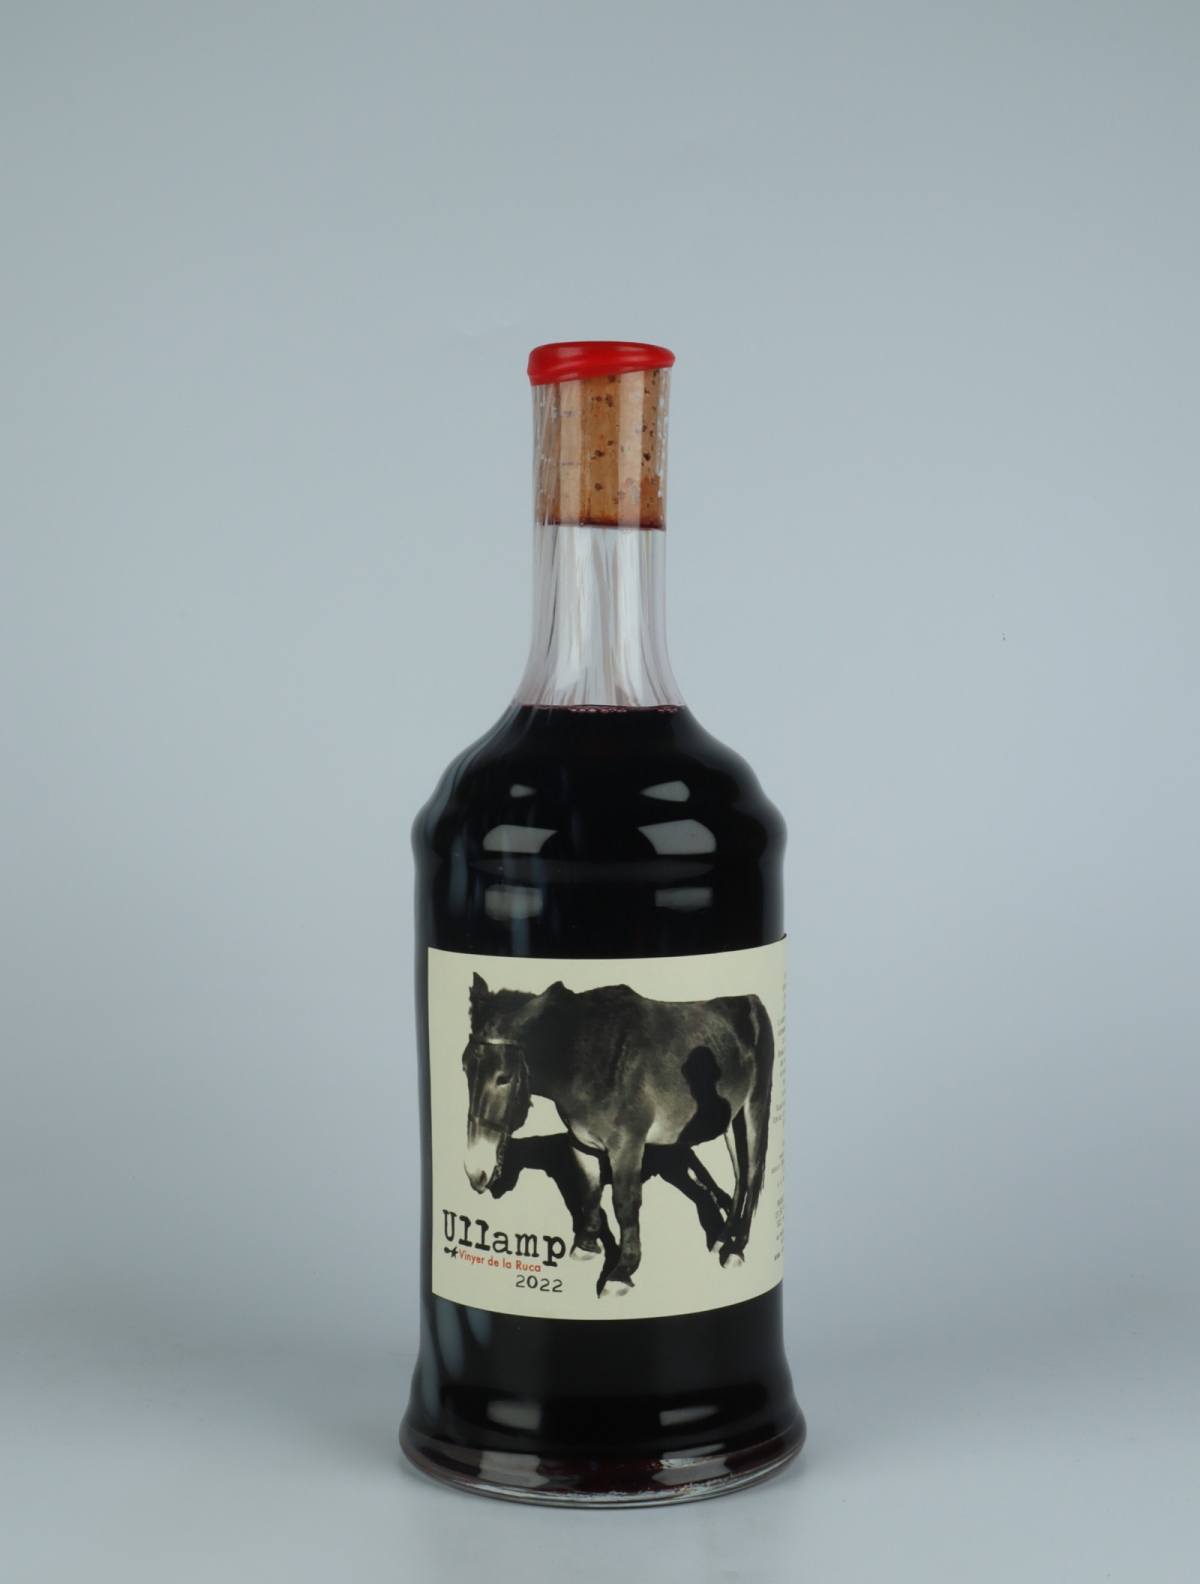 A bottle 2022 Ullamp Red wine from Vinyer de la Ruca, Rousillon in France